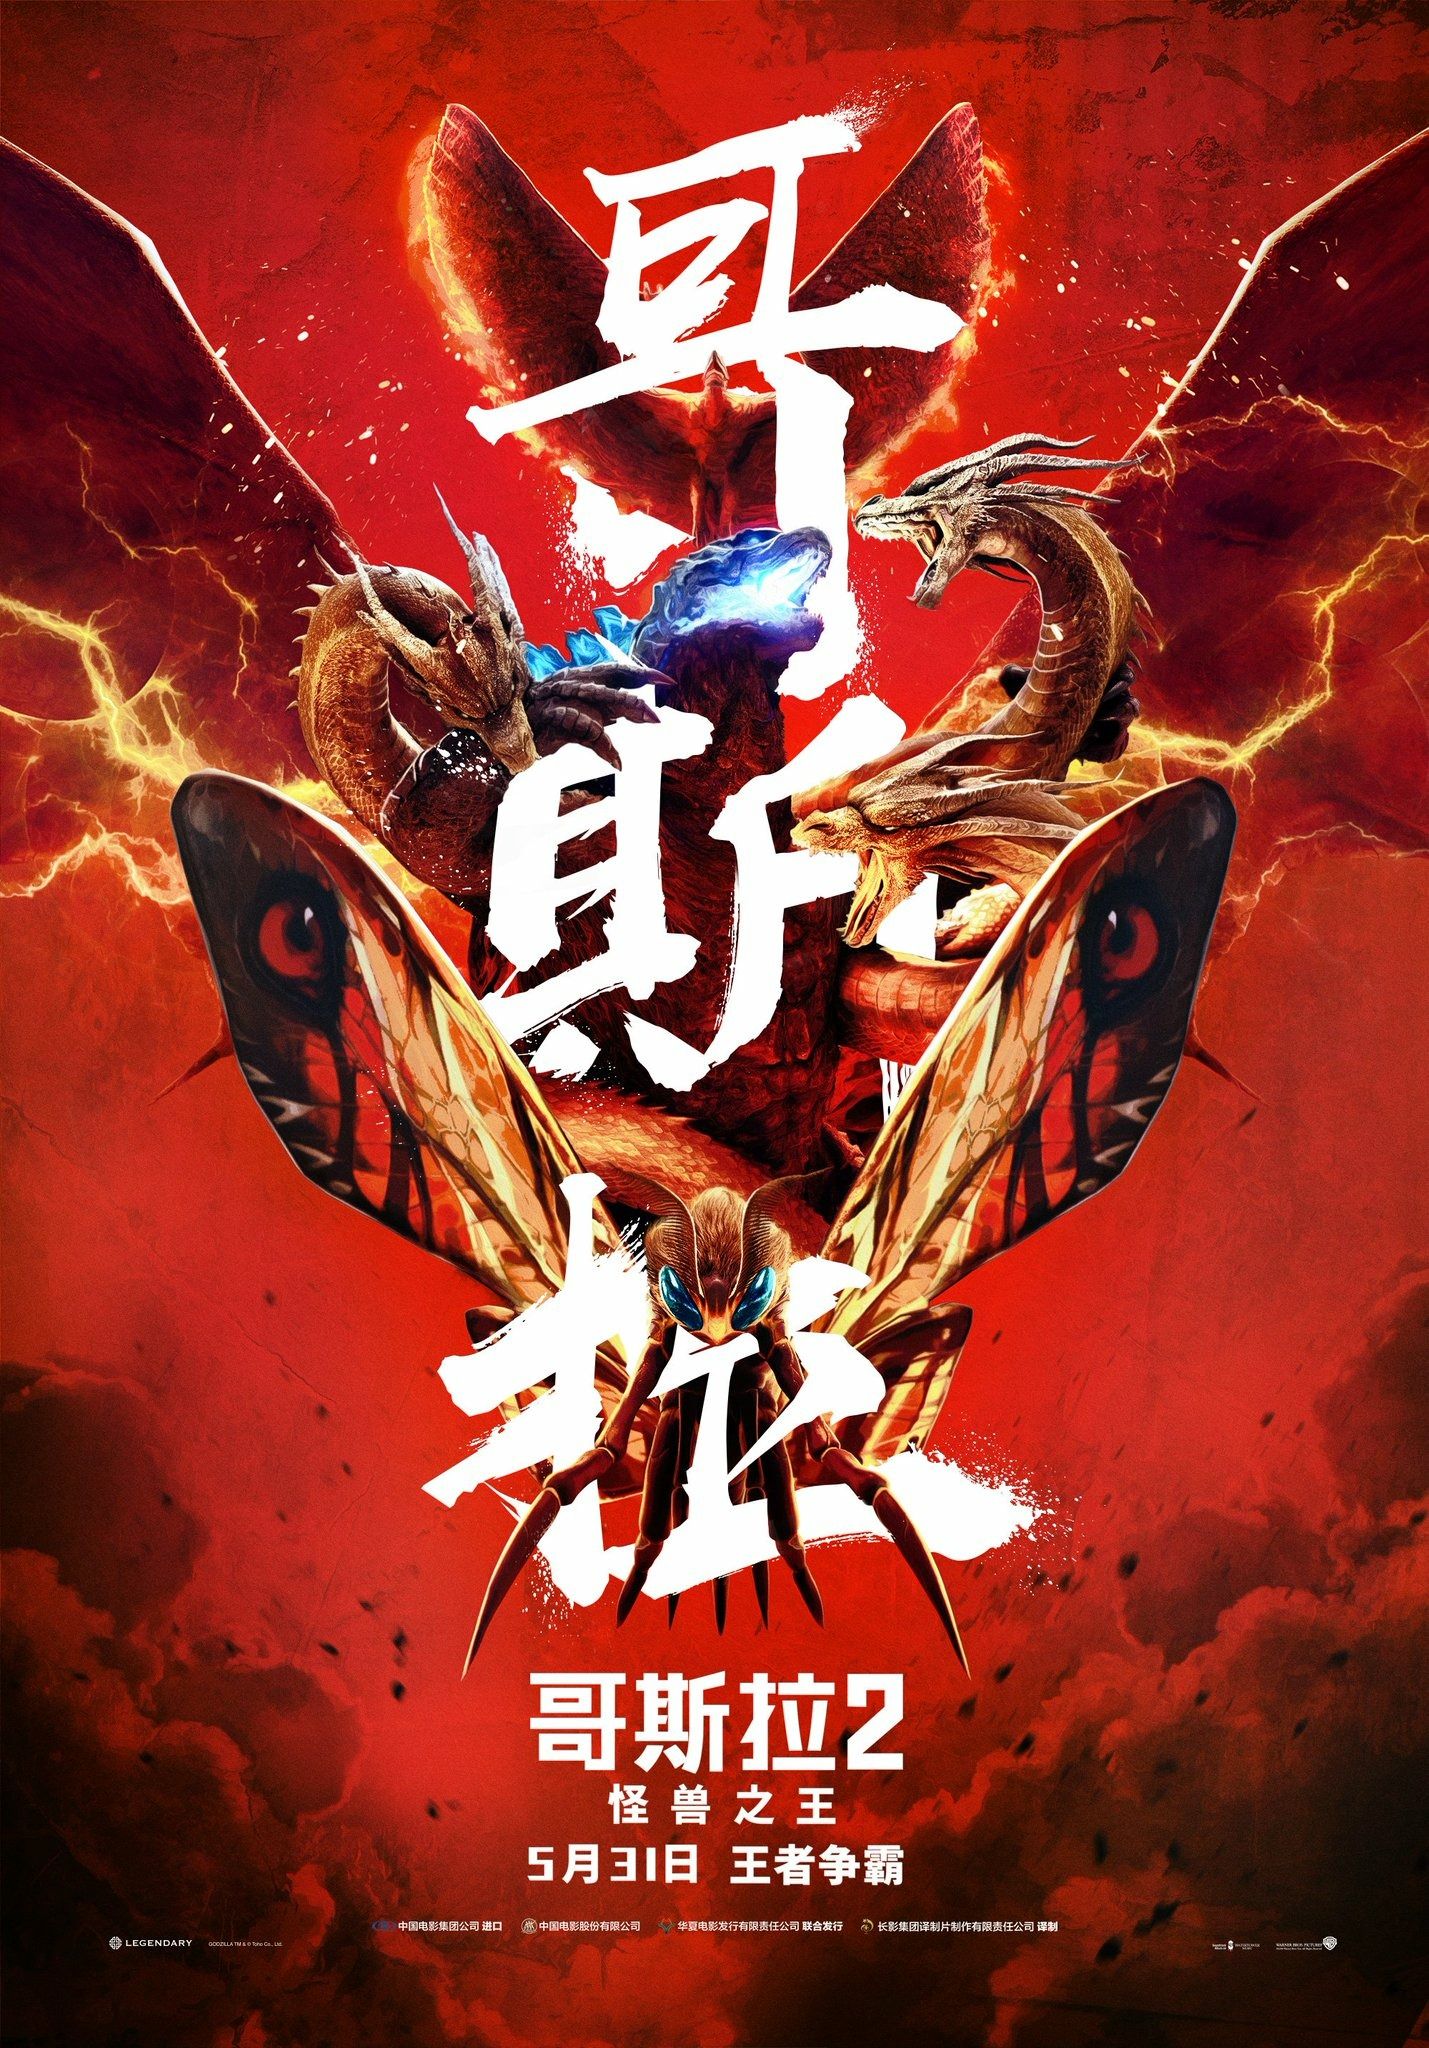 Godzilla King of the Monsters Toho style poster